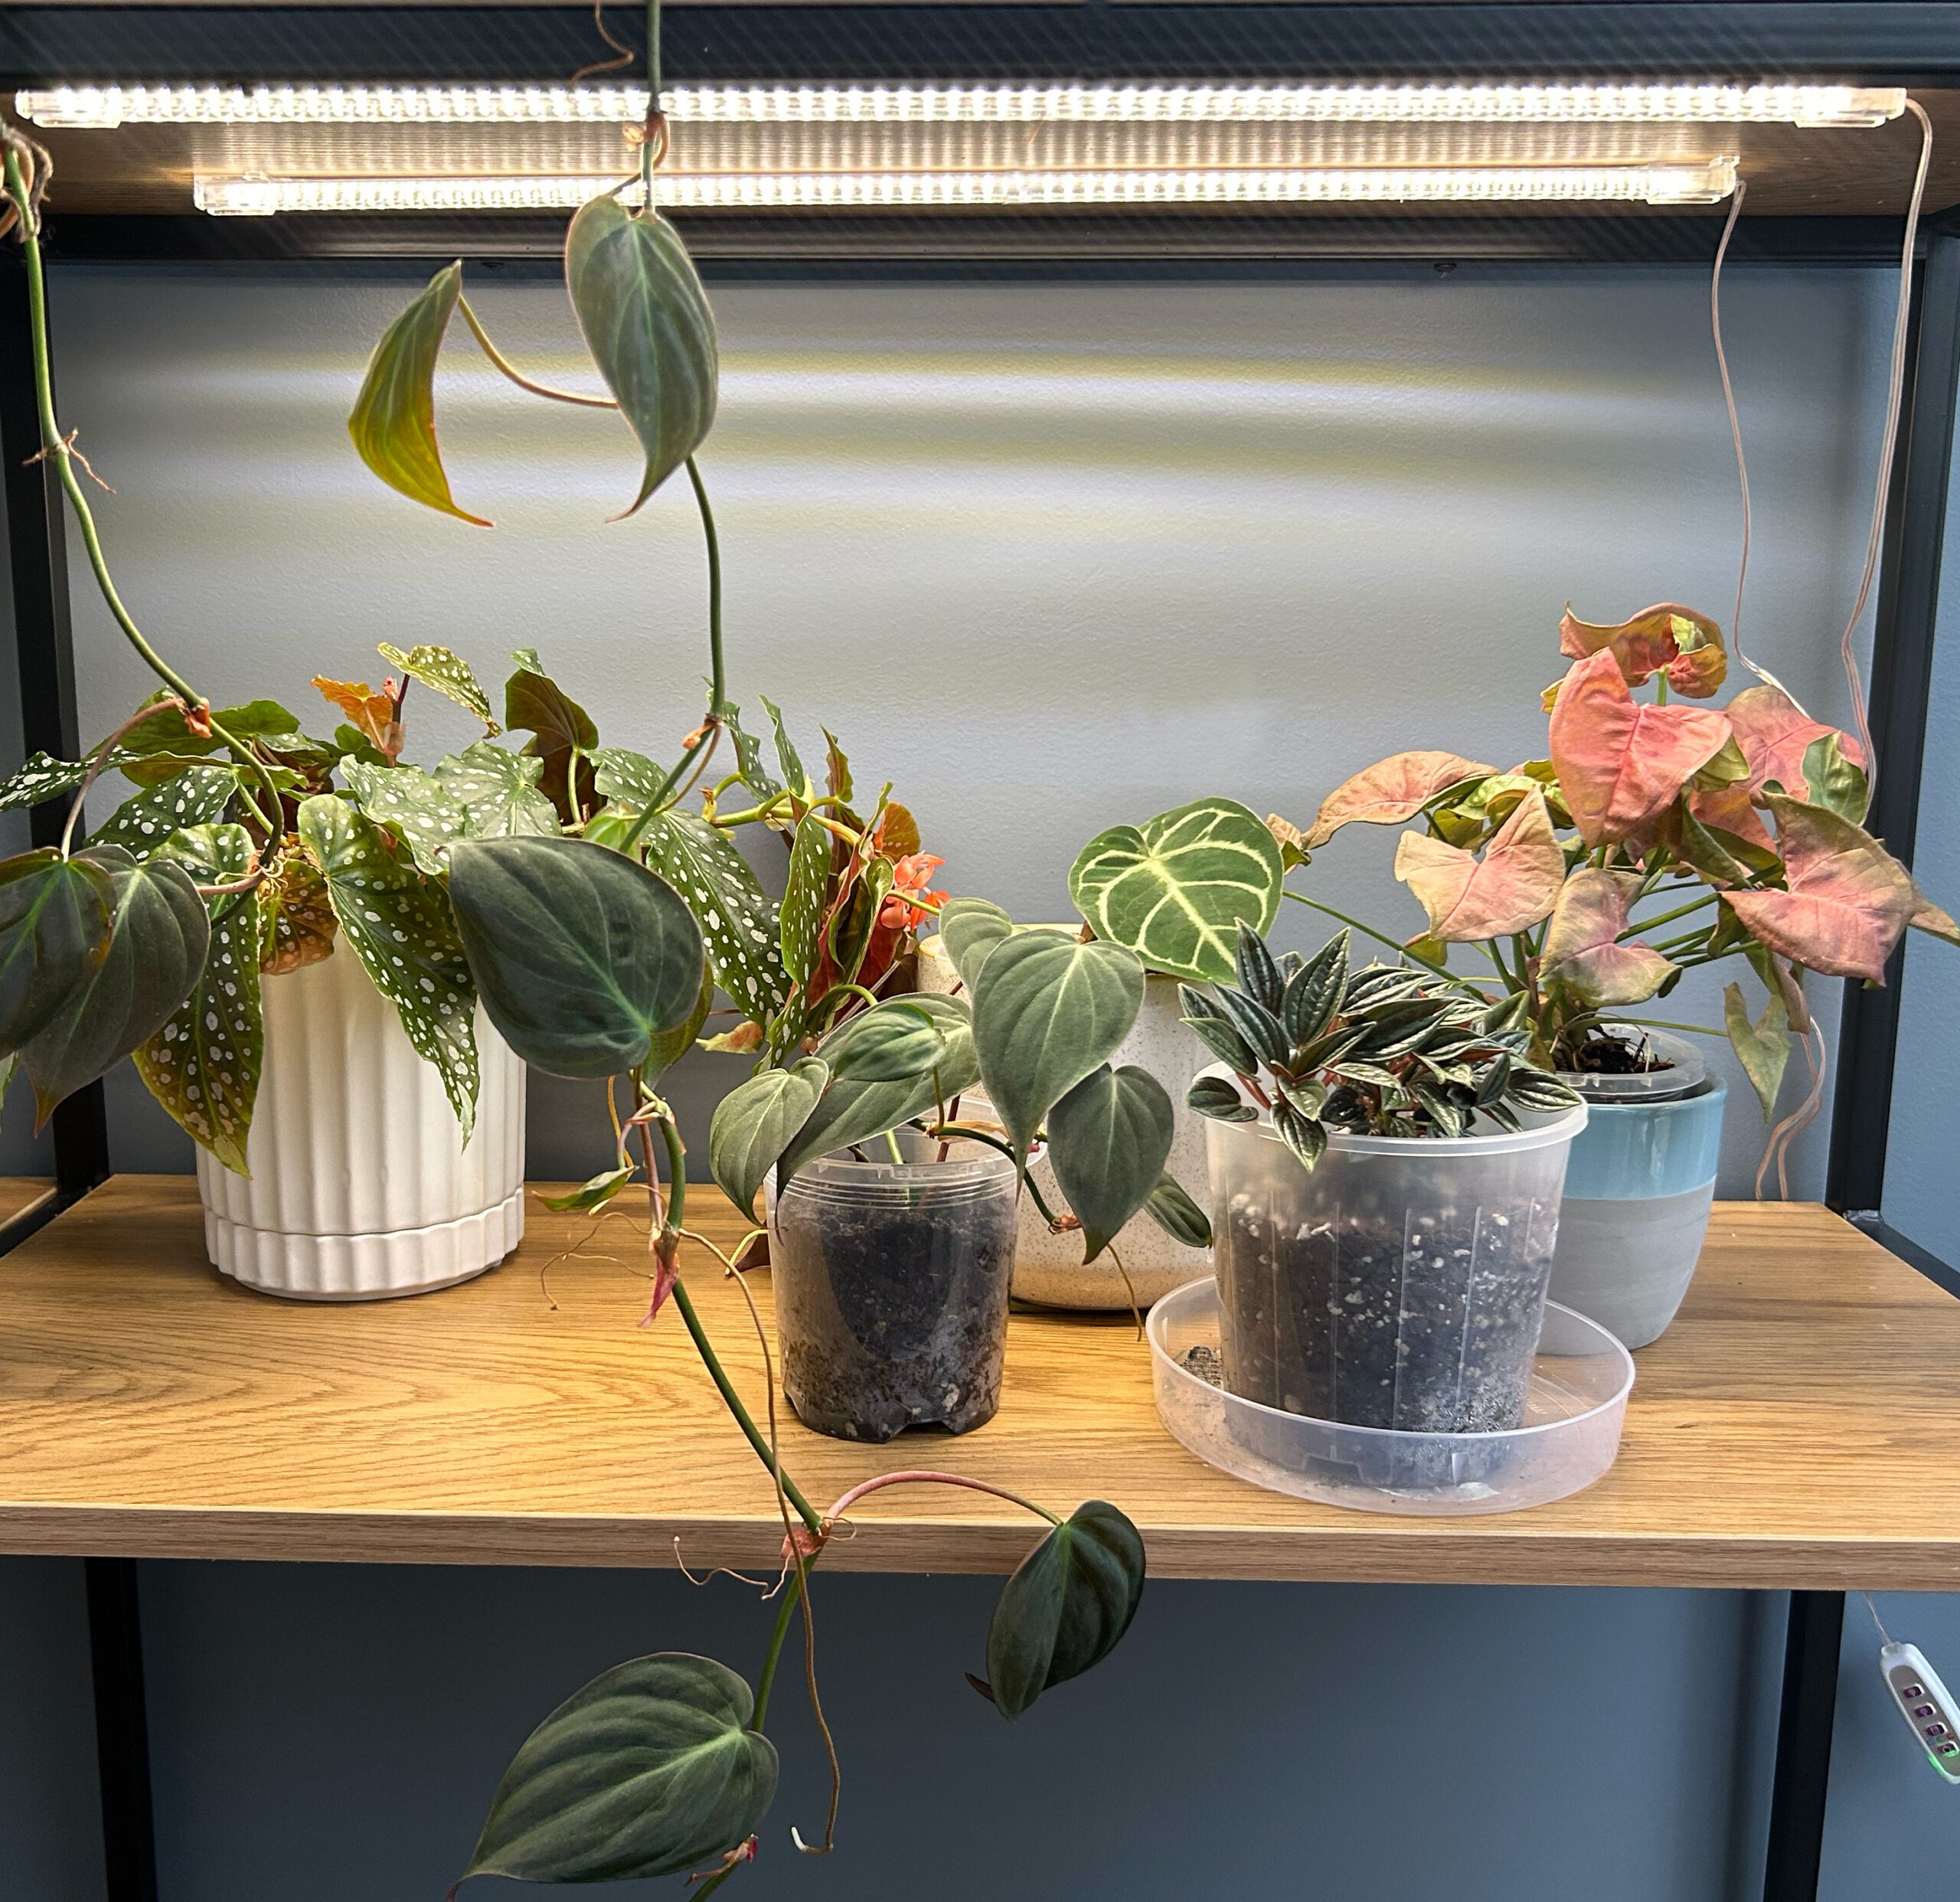 Indoor Plant LED Grow Light